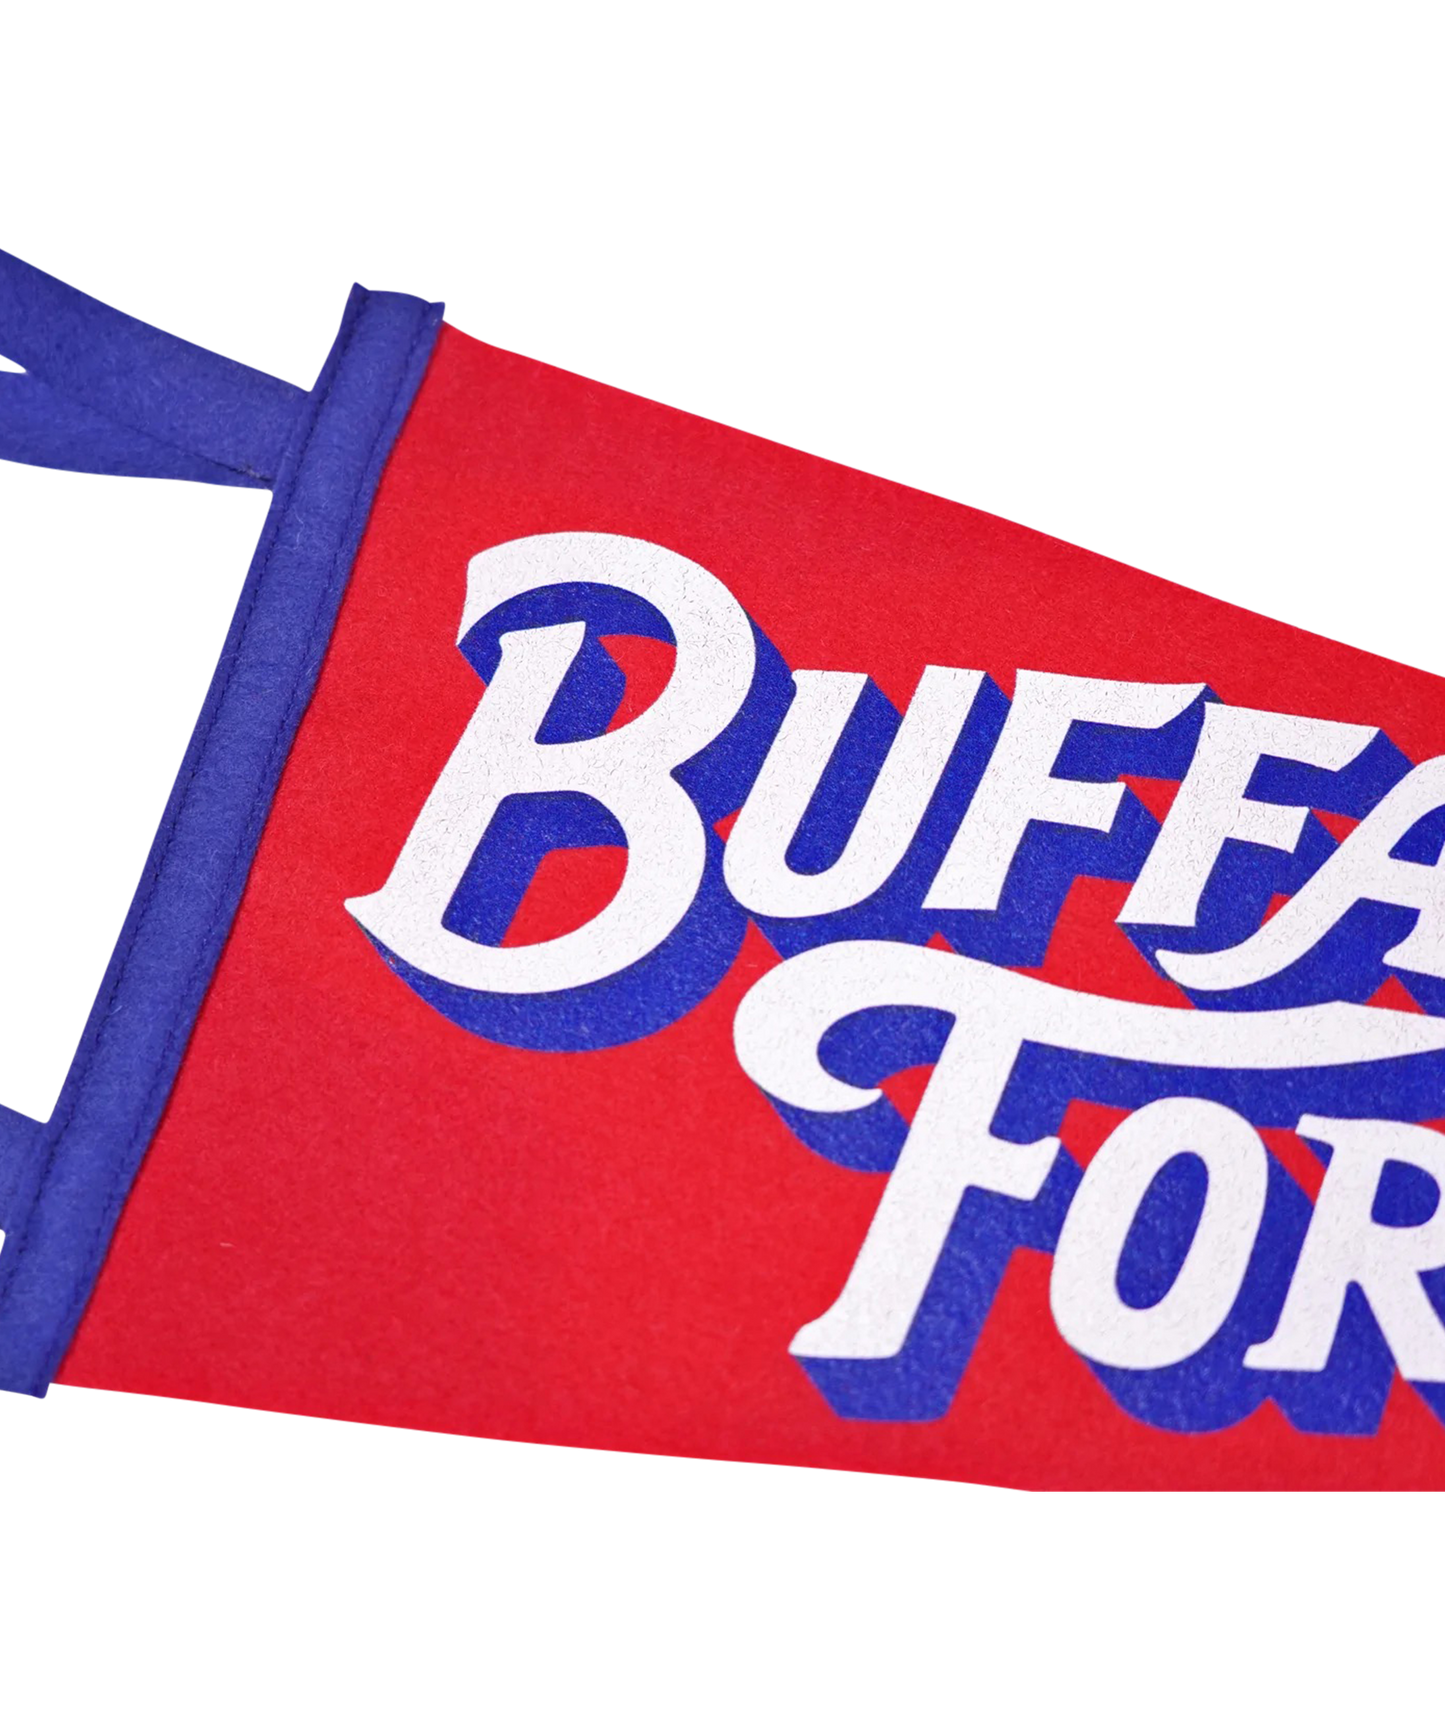 Buffalo Forever Pennant